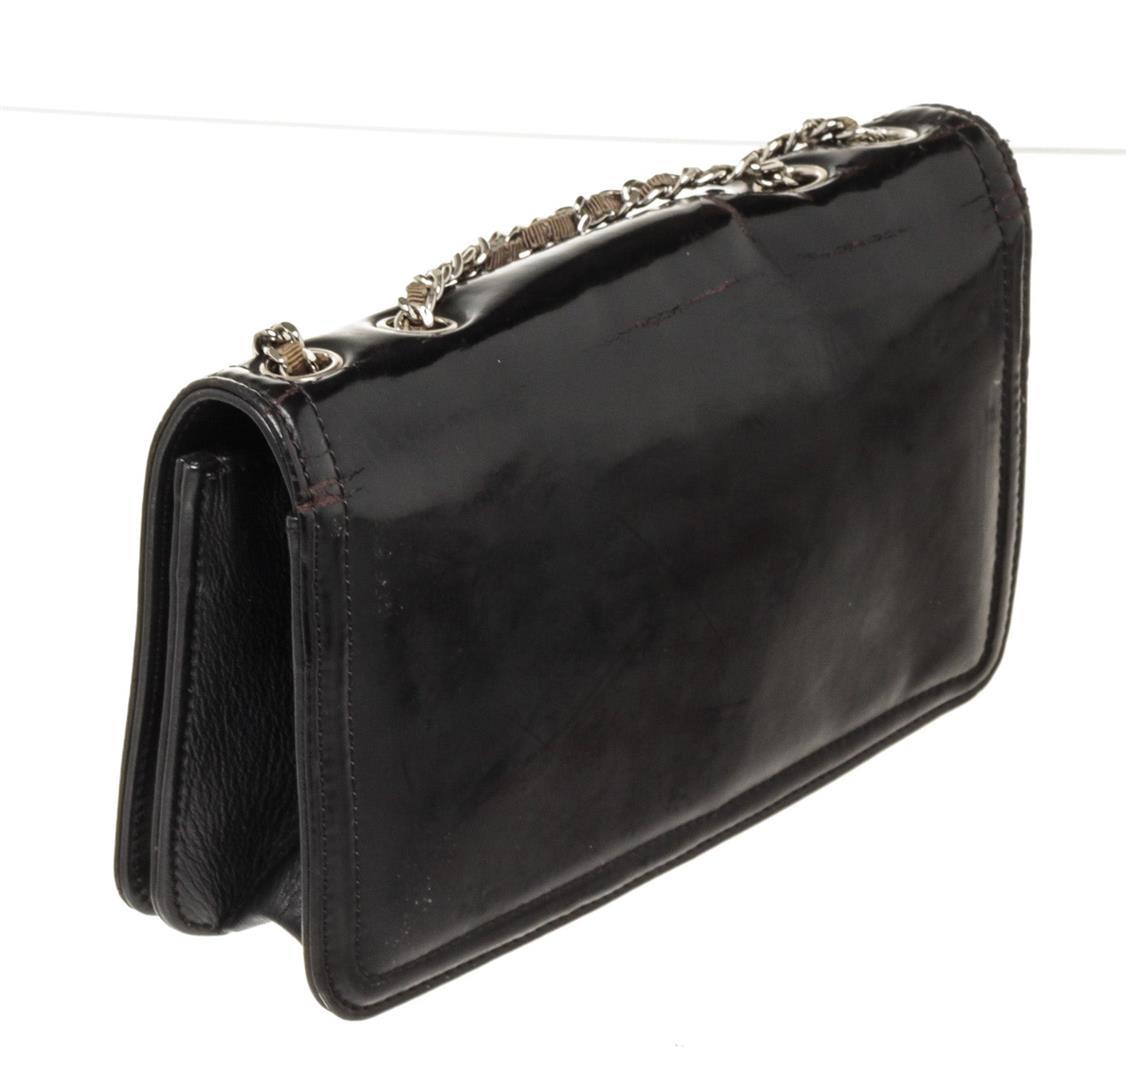 Chanel Black Caviar Leather CC Full Flap Shoulder Bag